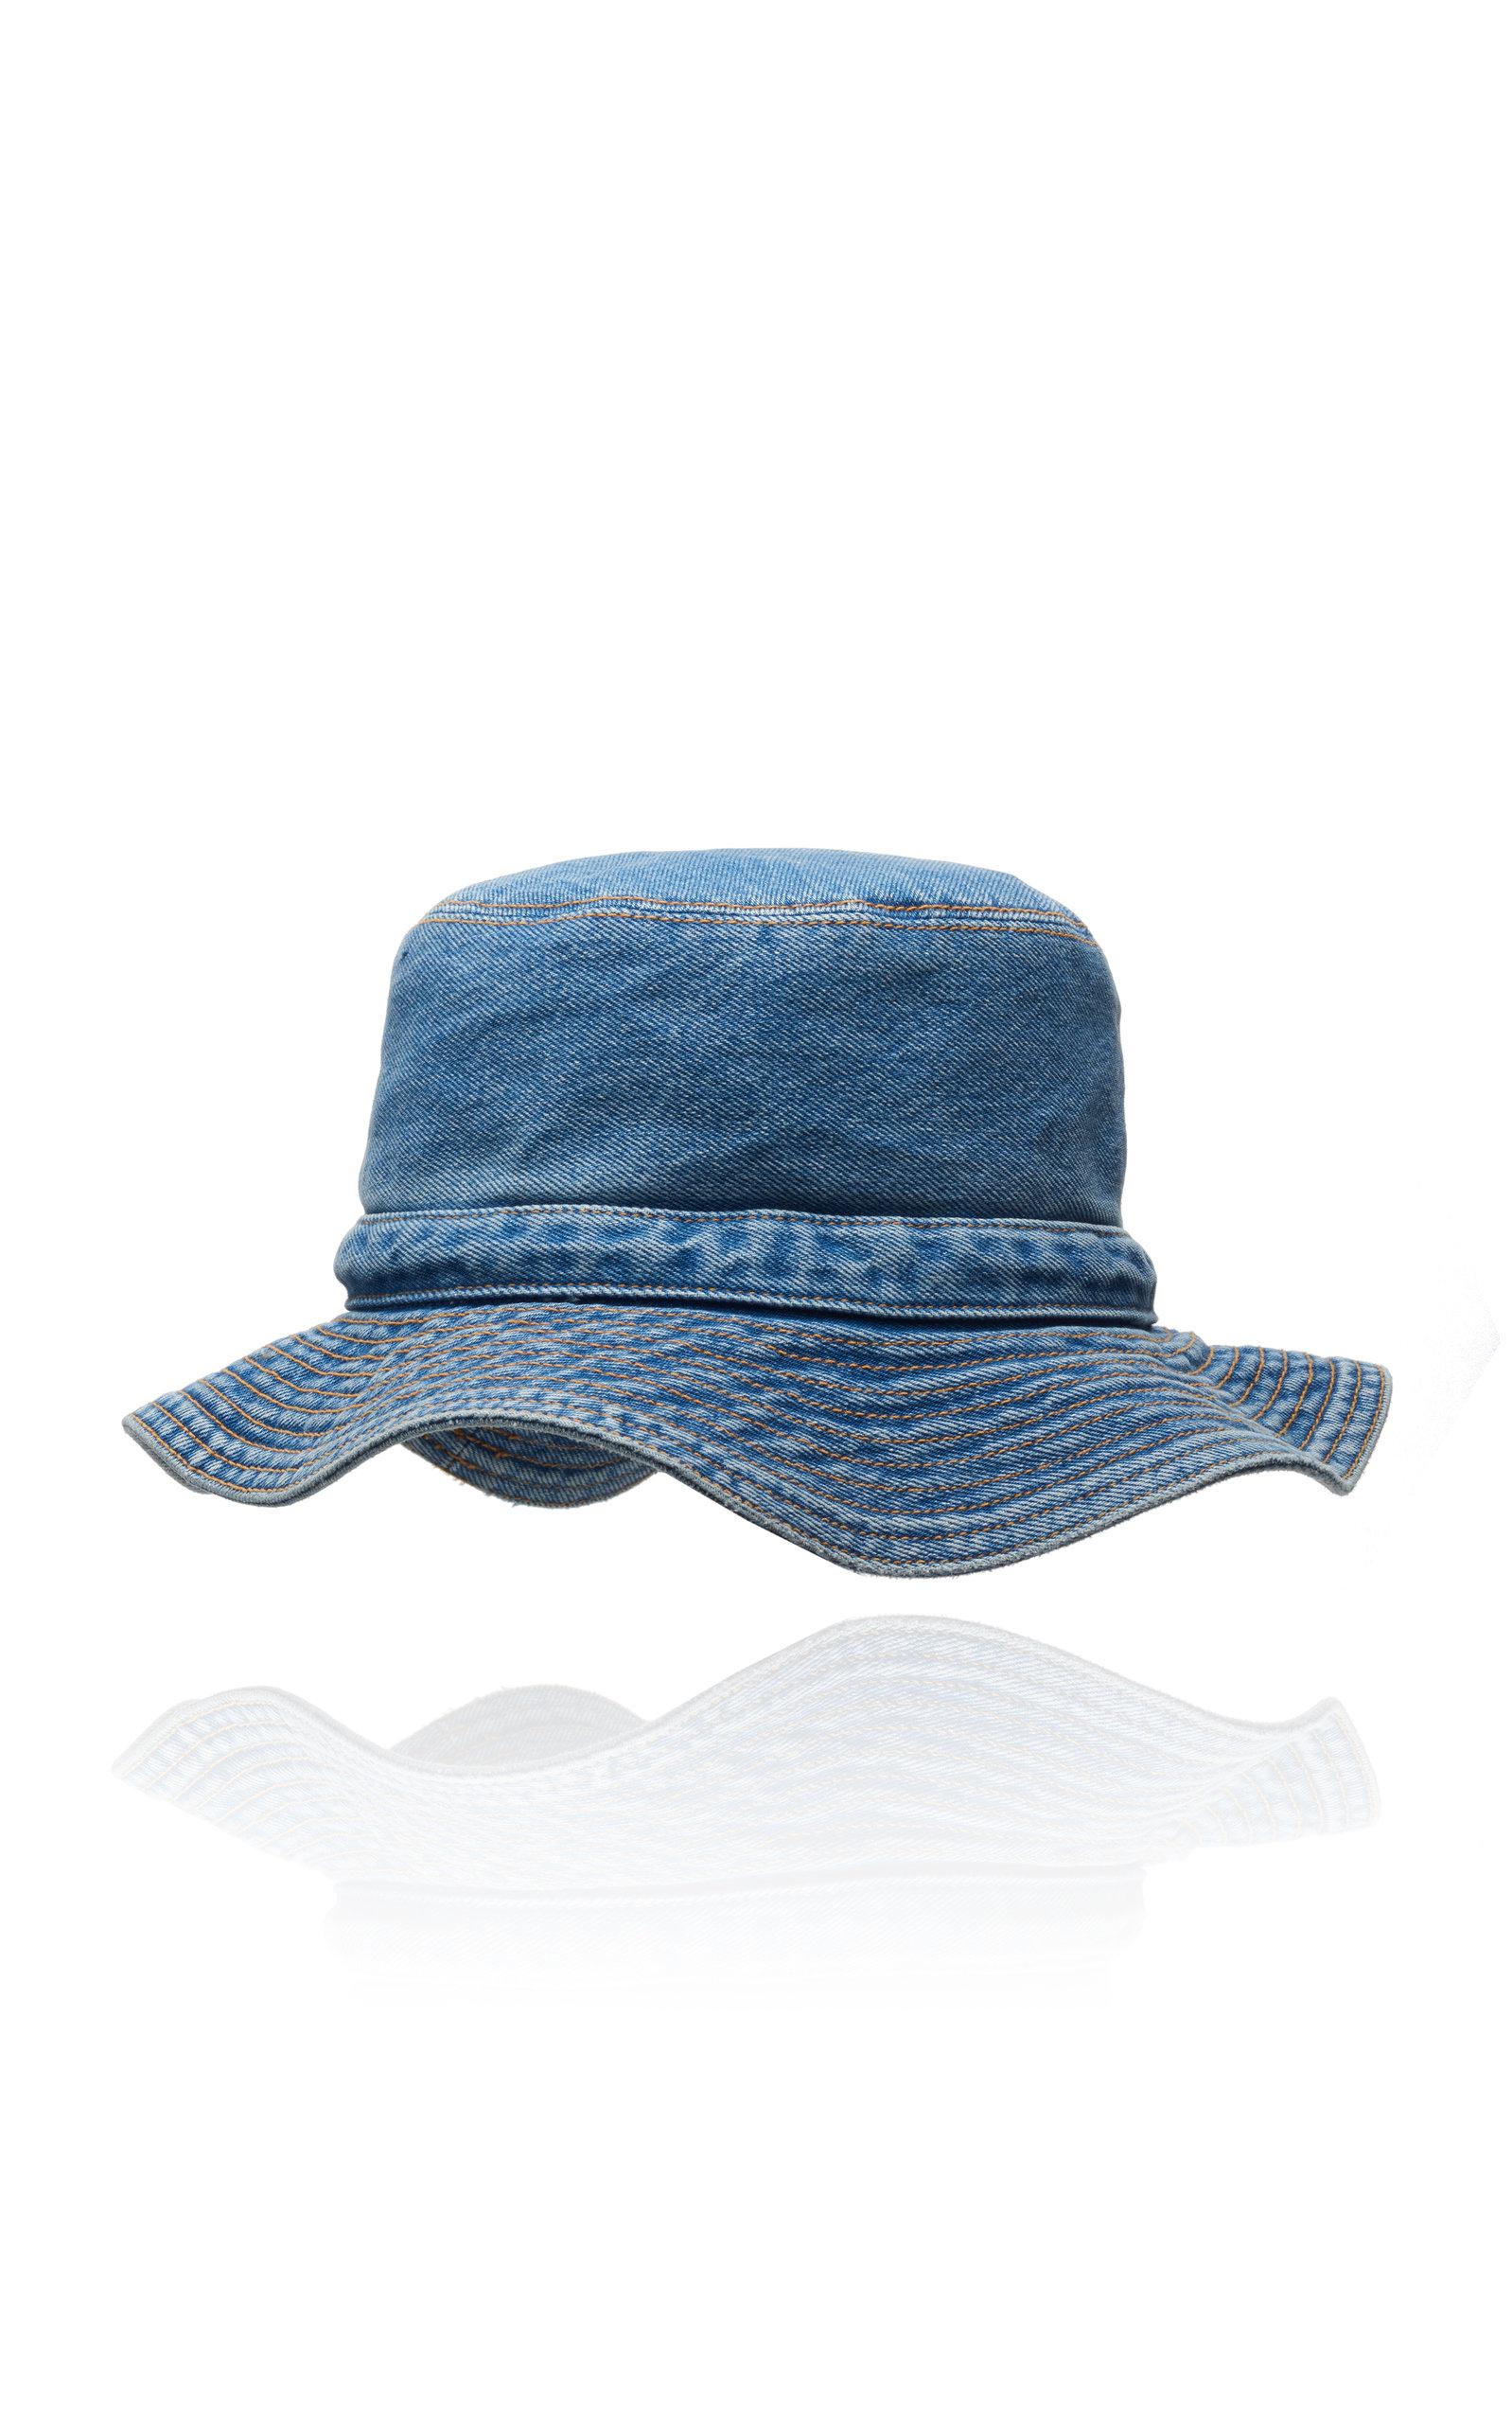 Ganni Washed Denim Bucket Hat in Blue - Lyst